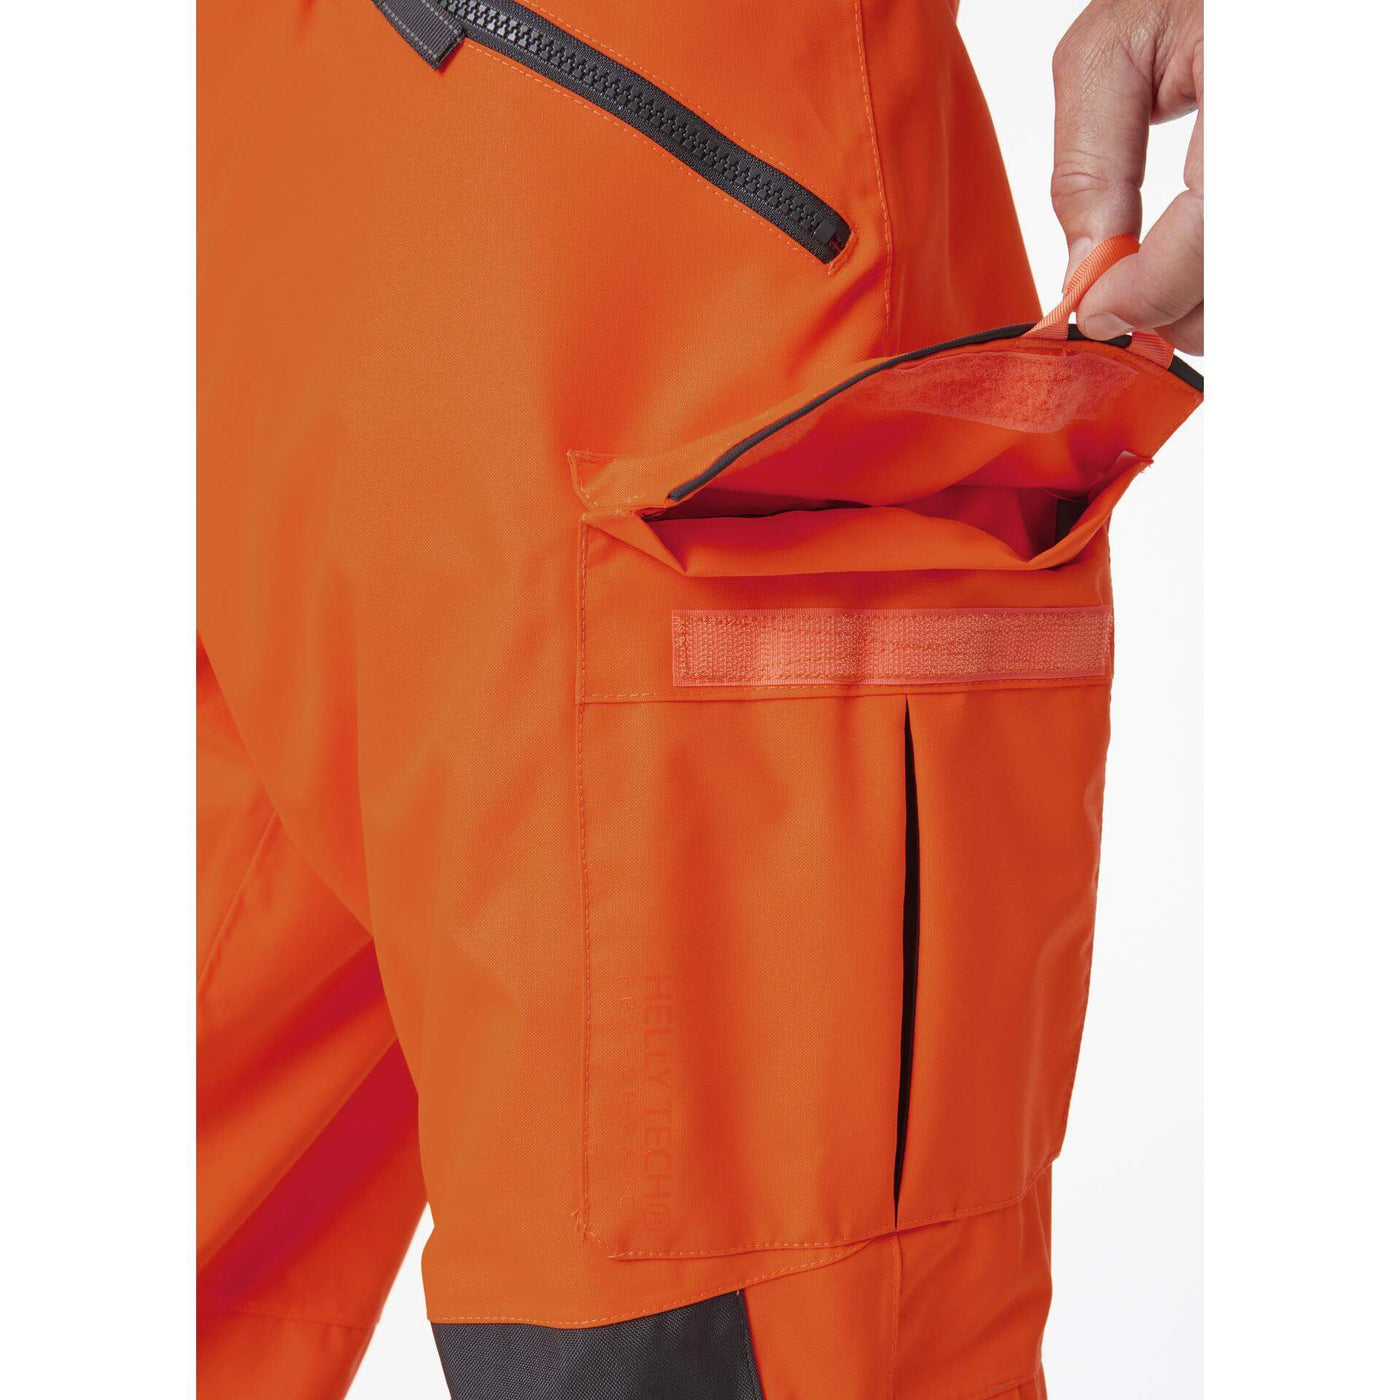 Helly Hansen Alna 2.0 Hi Vis Waterproof Shell Construction Bib and Brace Trousers Class 2 Orange/Ebony 7 Feature 3#colour_orange-ebony